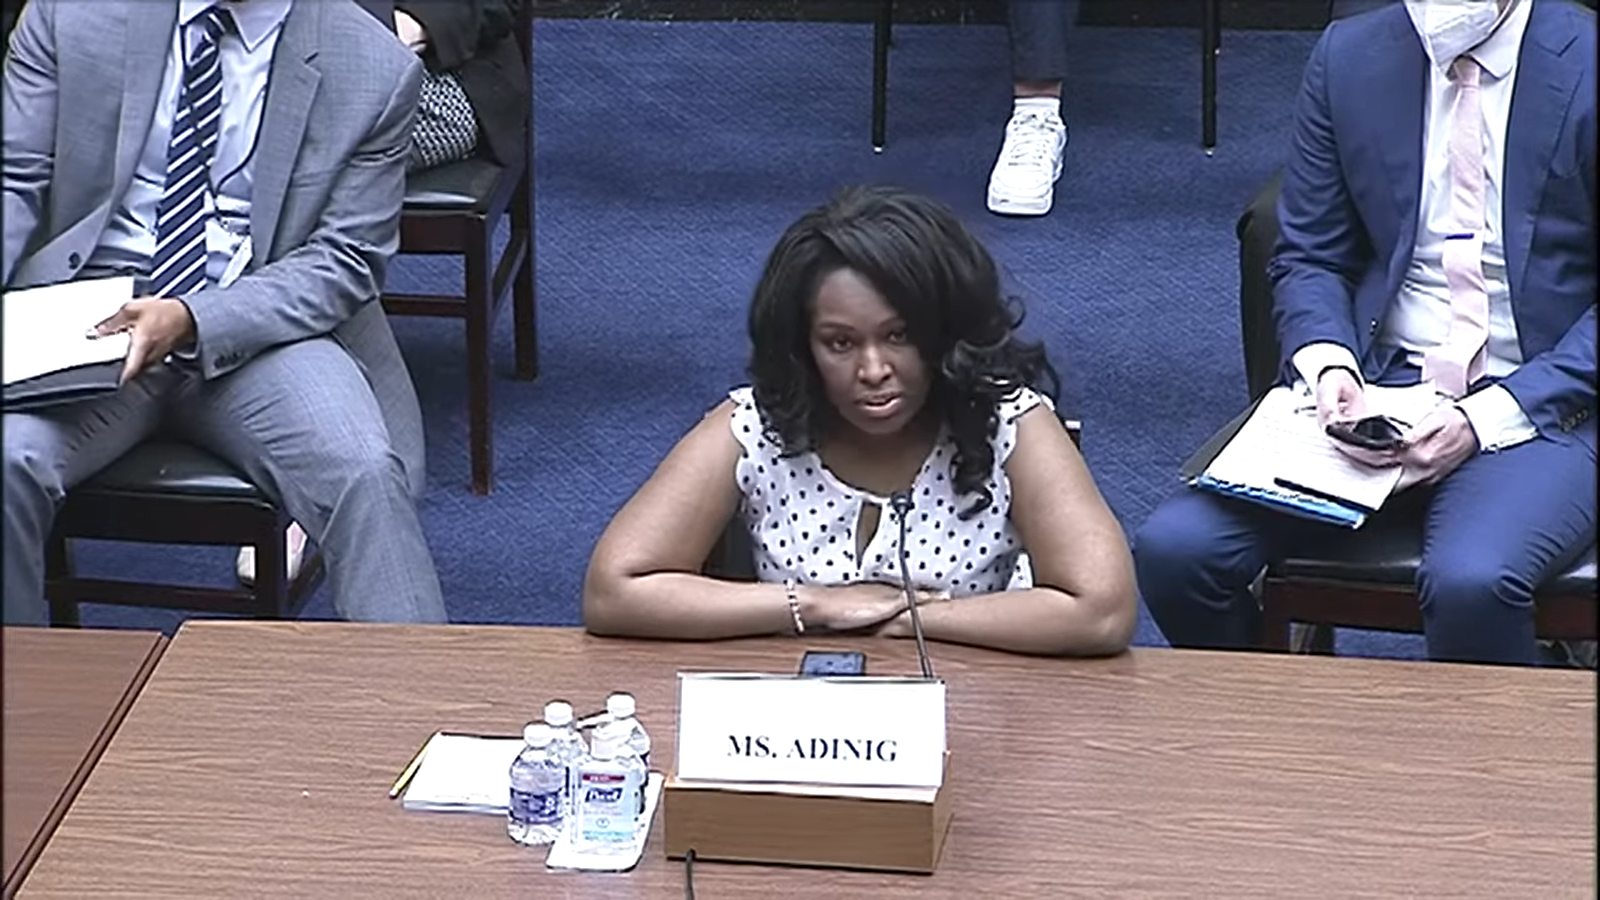 Cynthia Adinig at Subcommittee Hearing